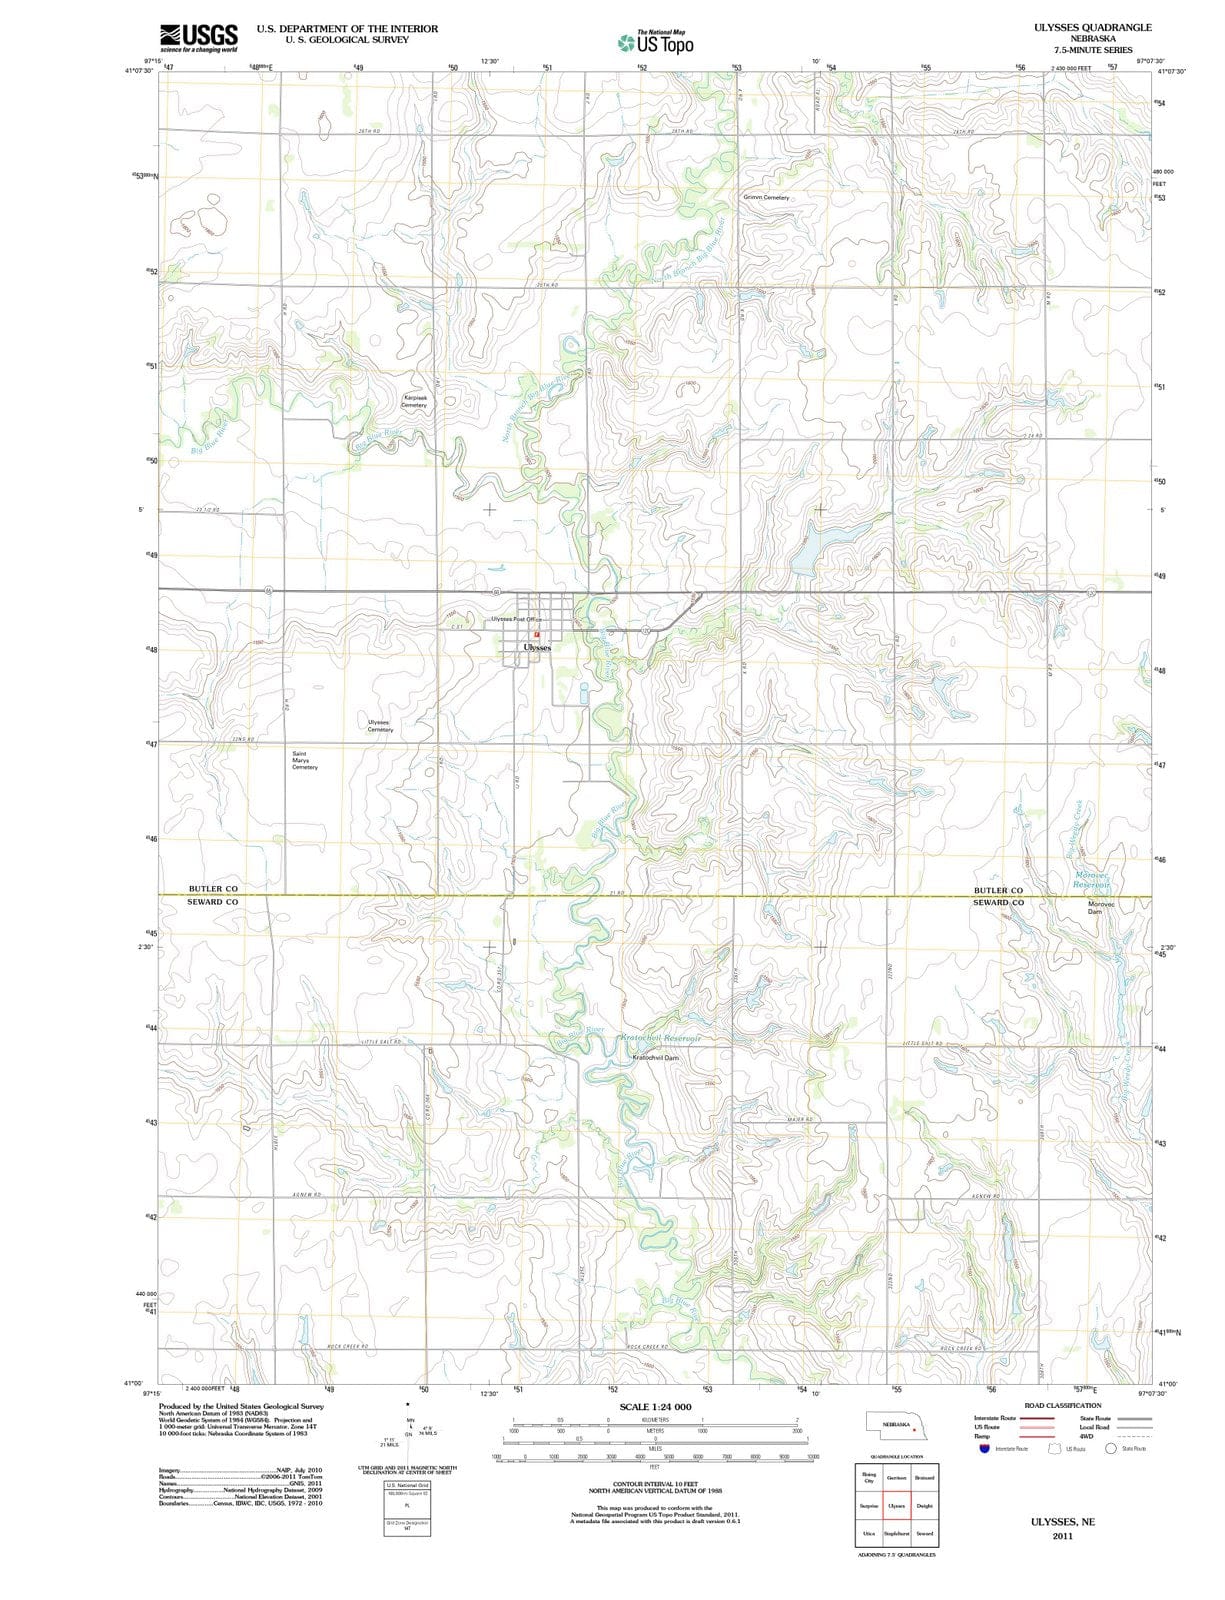 2011 Ulysses, NE - Nebraska - USGS Topographic Map